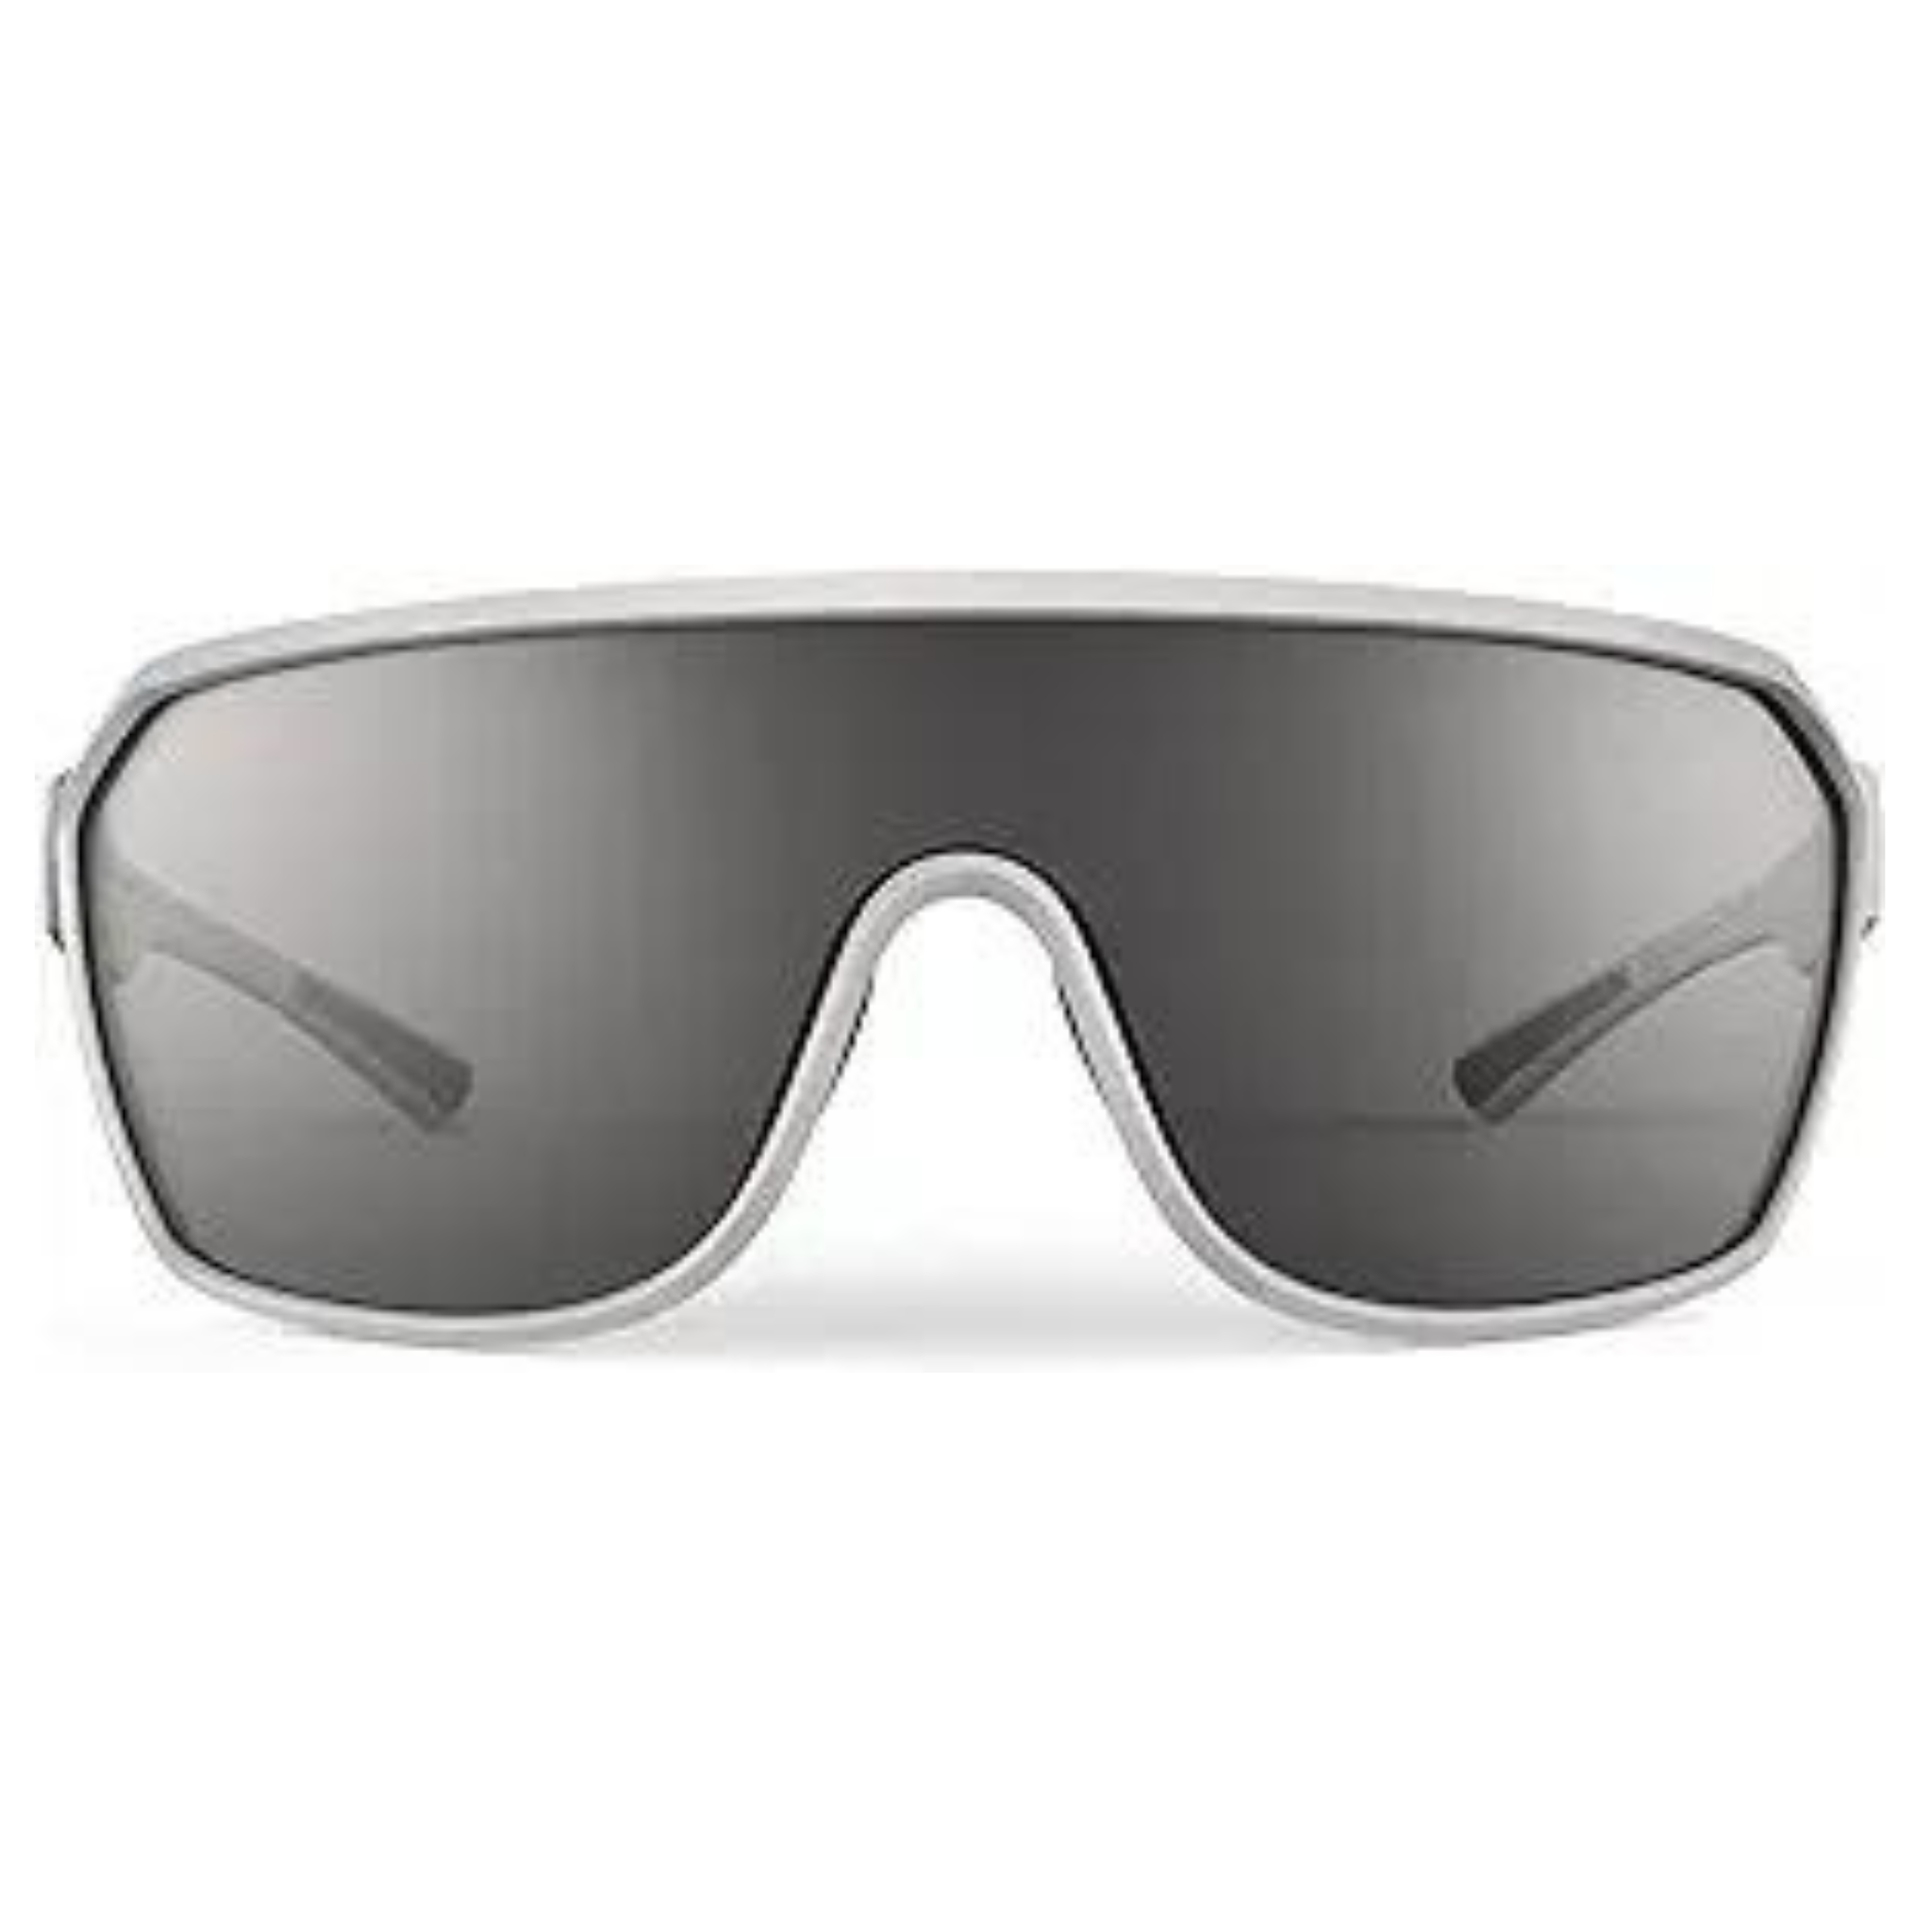 KastKing Gunnison Polarized Sports Sunglasses for Men and Women